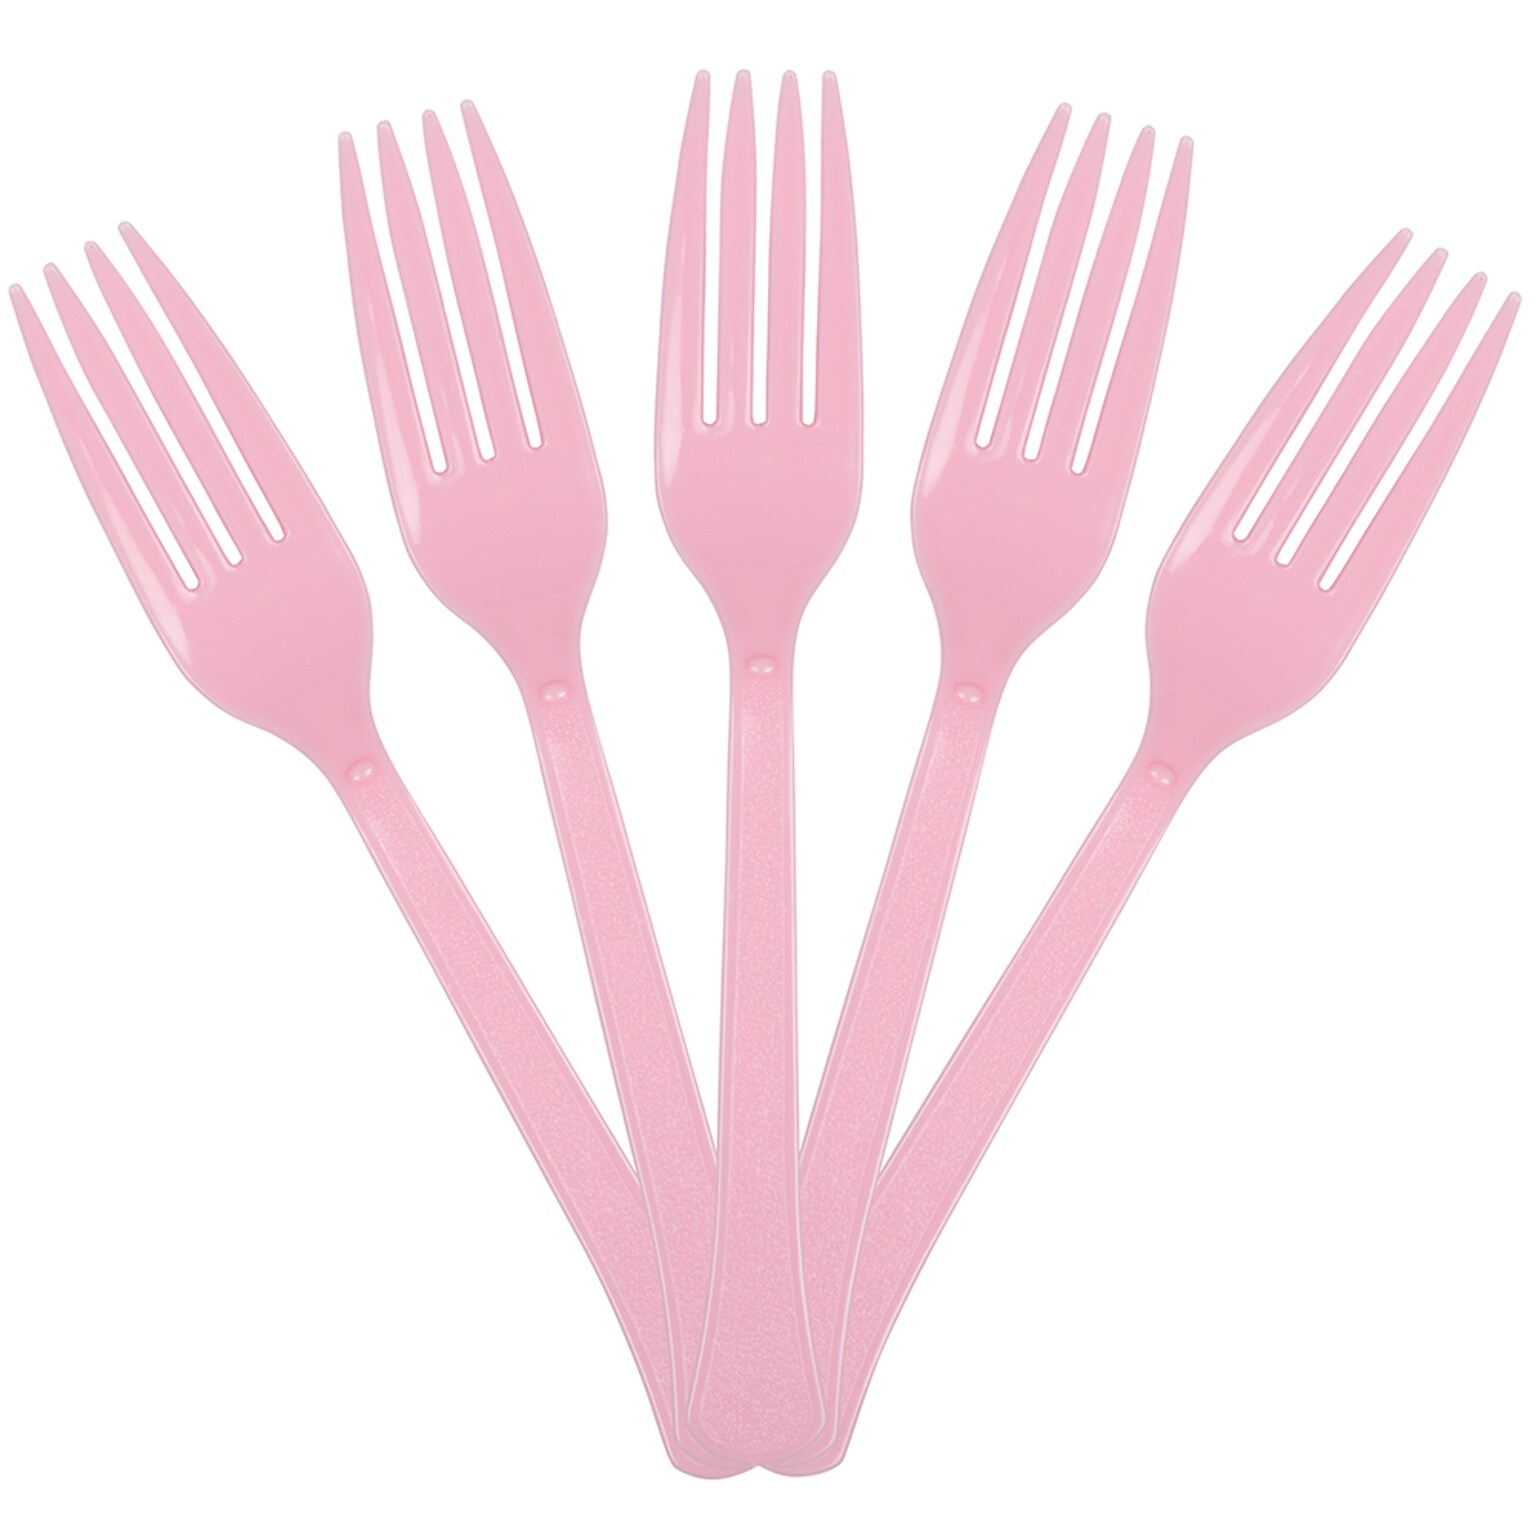 JAM PAPER Premium Utensils Party Pack, Plastic Forks, Light Pink, 48 Disposable Forks/Pack